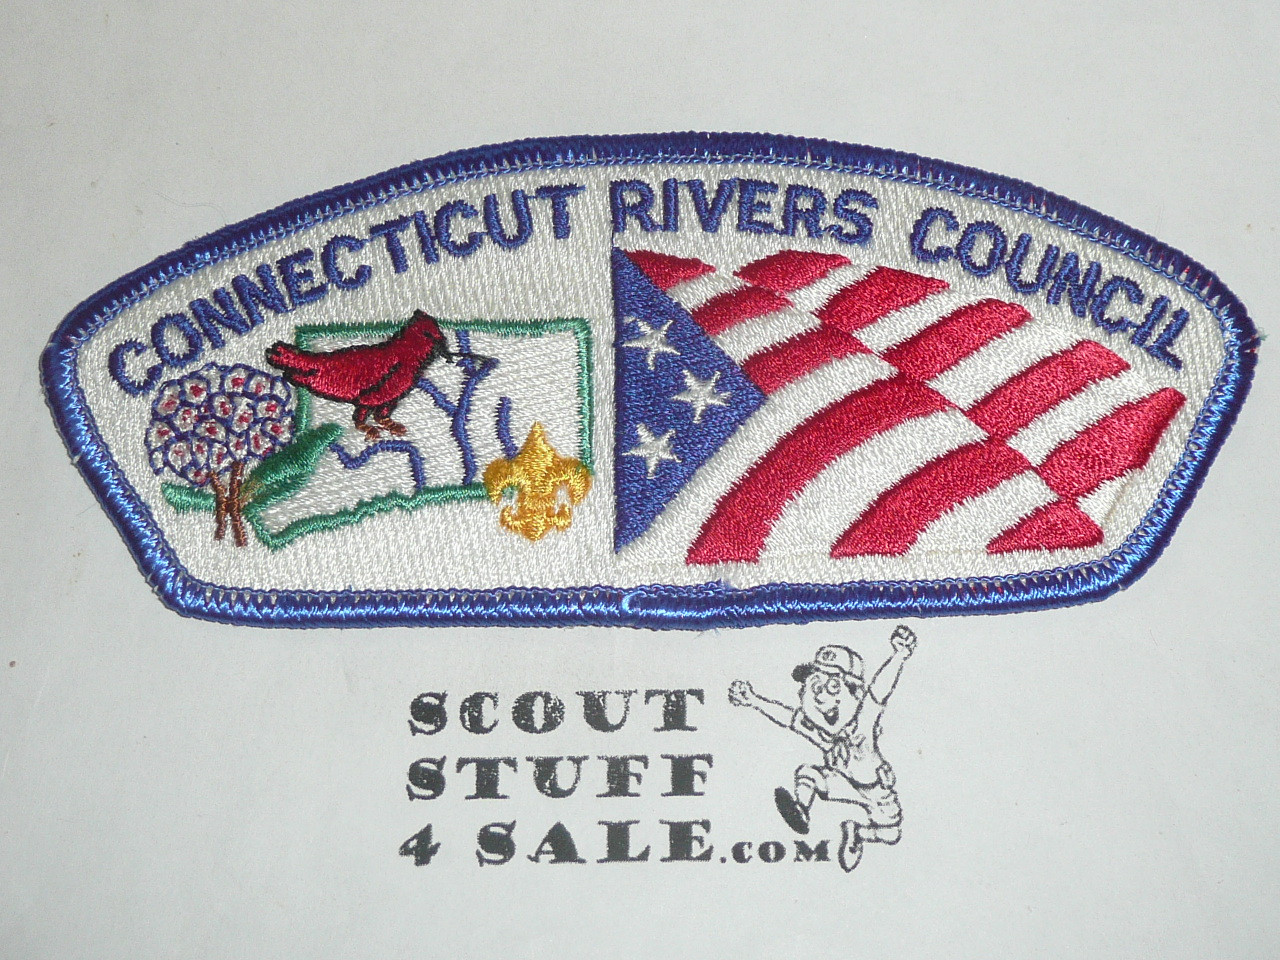 Connecticut Rivers Council s-a Mfg Sample CSP - Scout